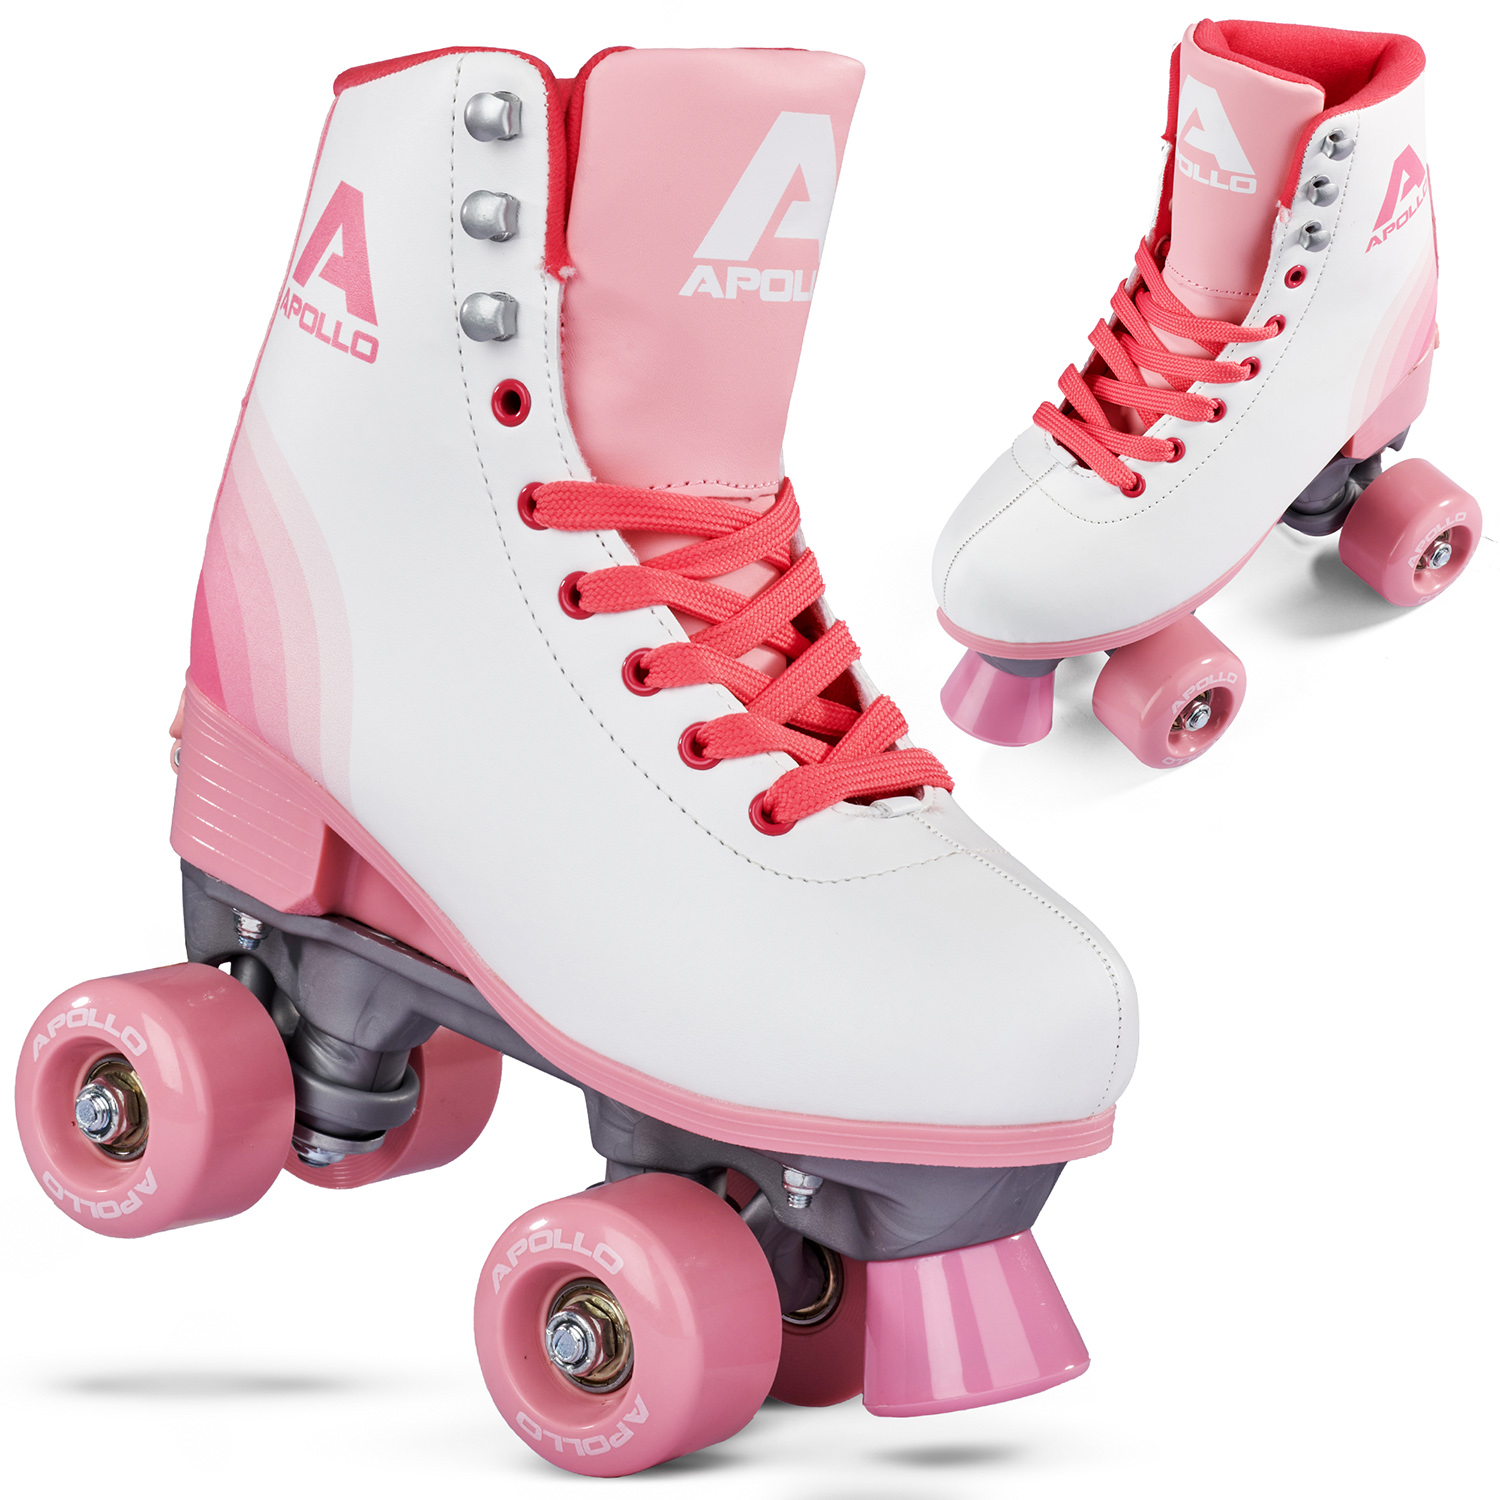 Rollschuhe Retro Quad Skate Kinderrollschuhe Größen 35-40 Kinder Mädchen Junge 